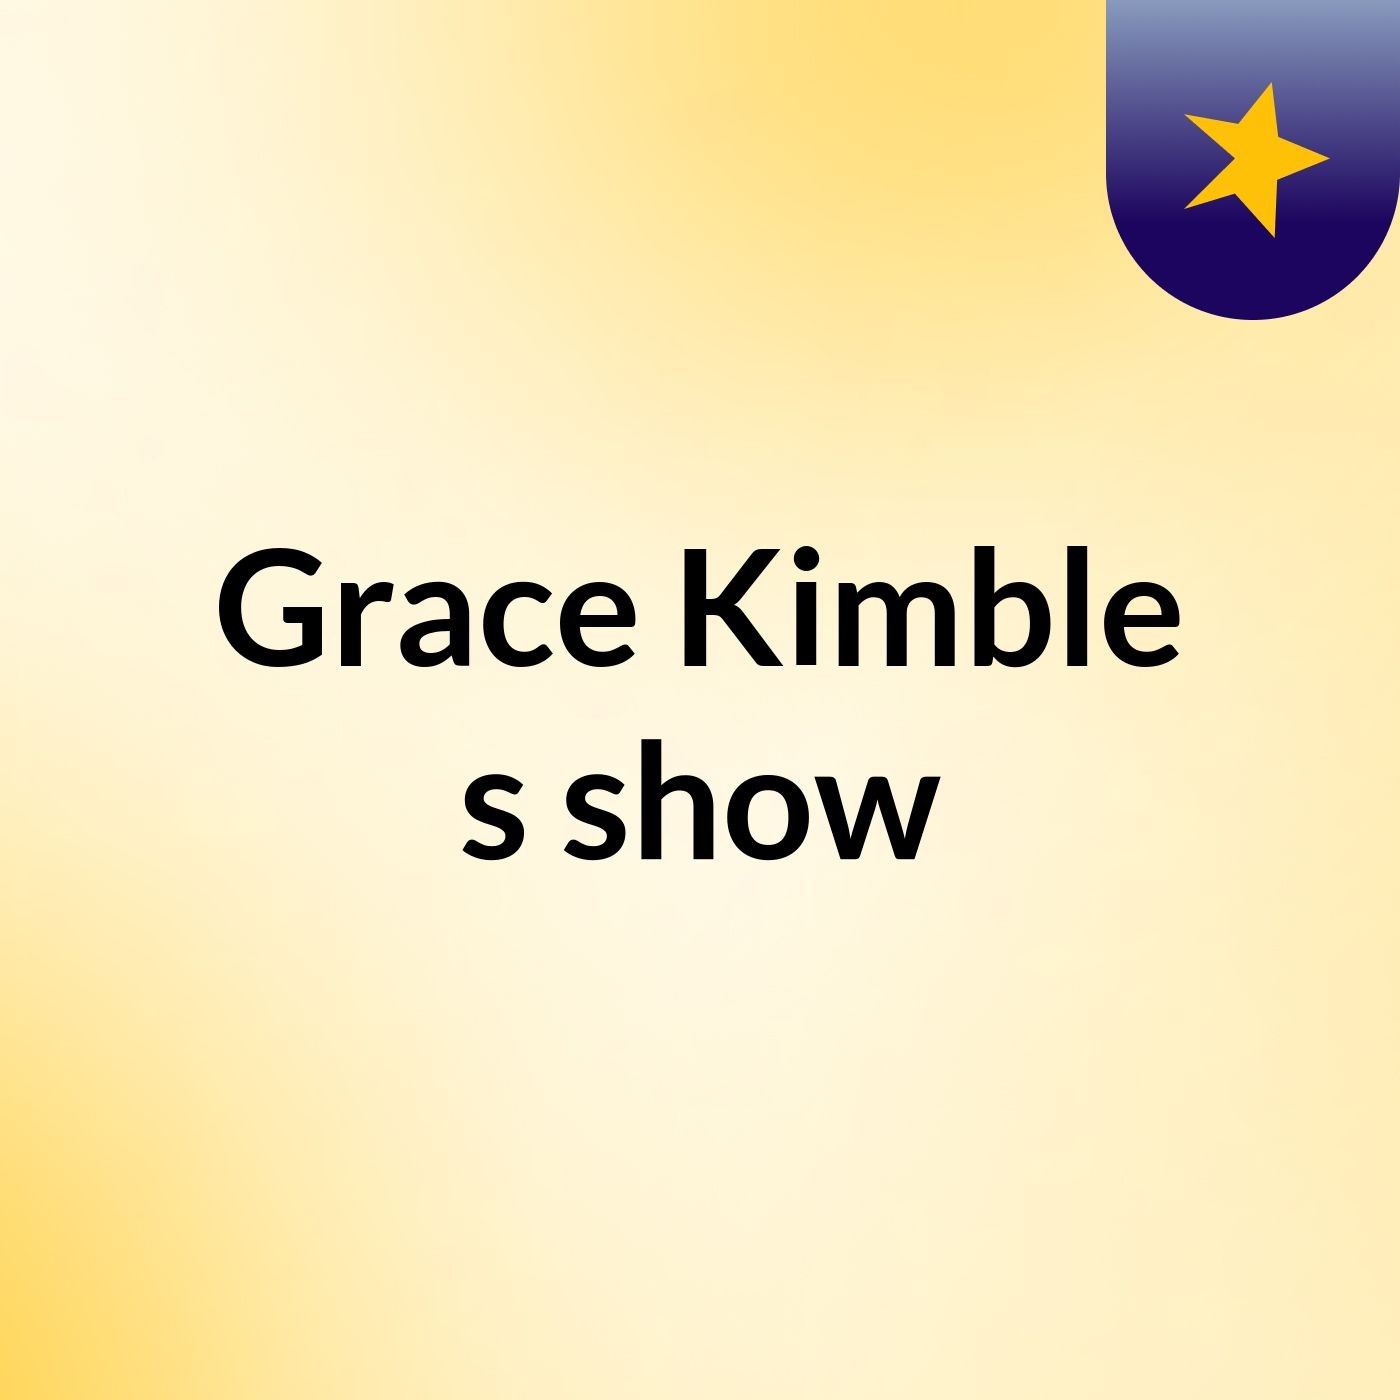 Grace Kimble's show